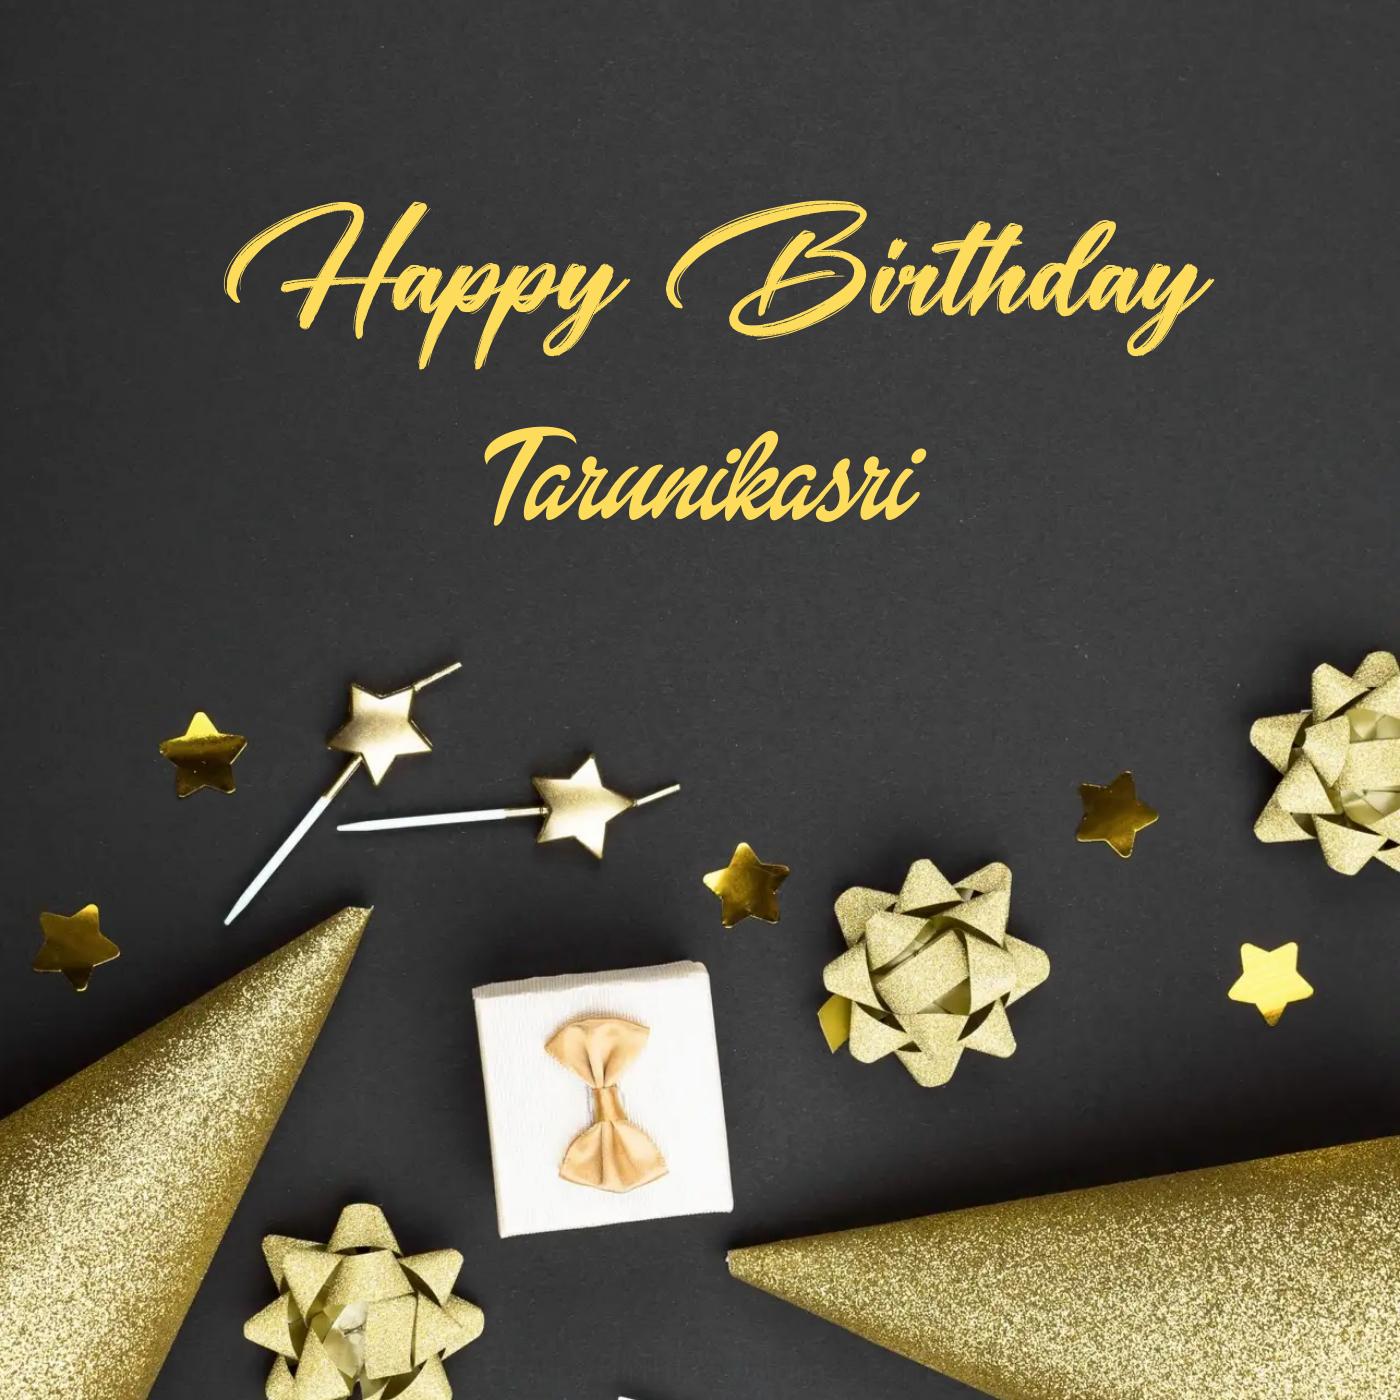 Happy Birthday Tarunikasri Golden Theme Card